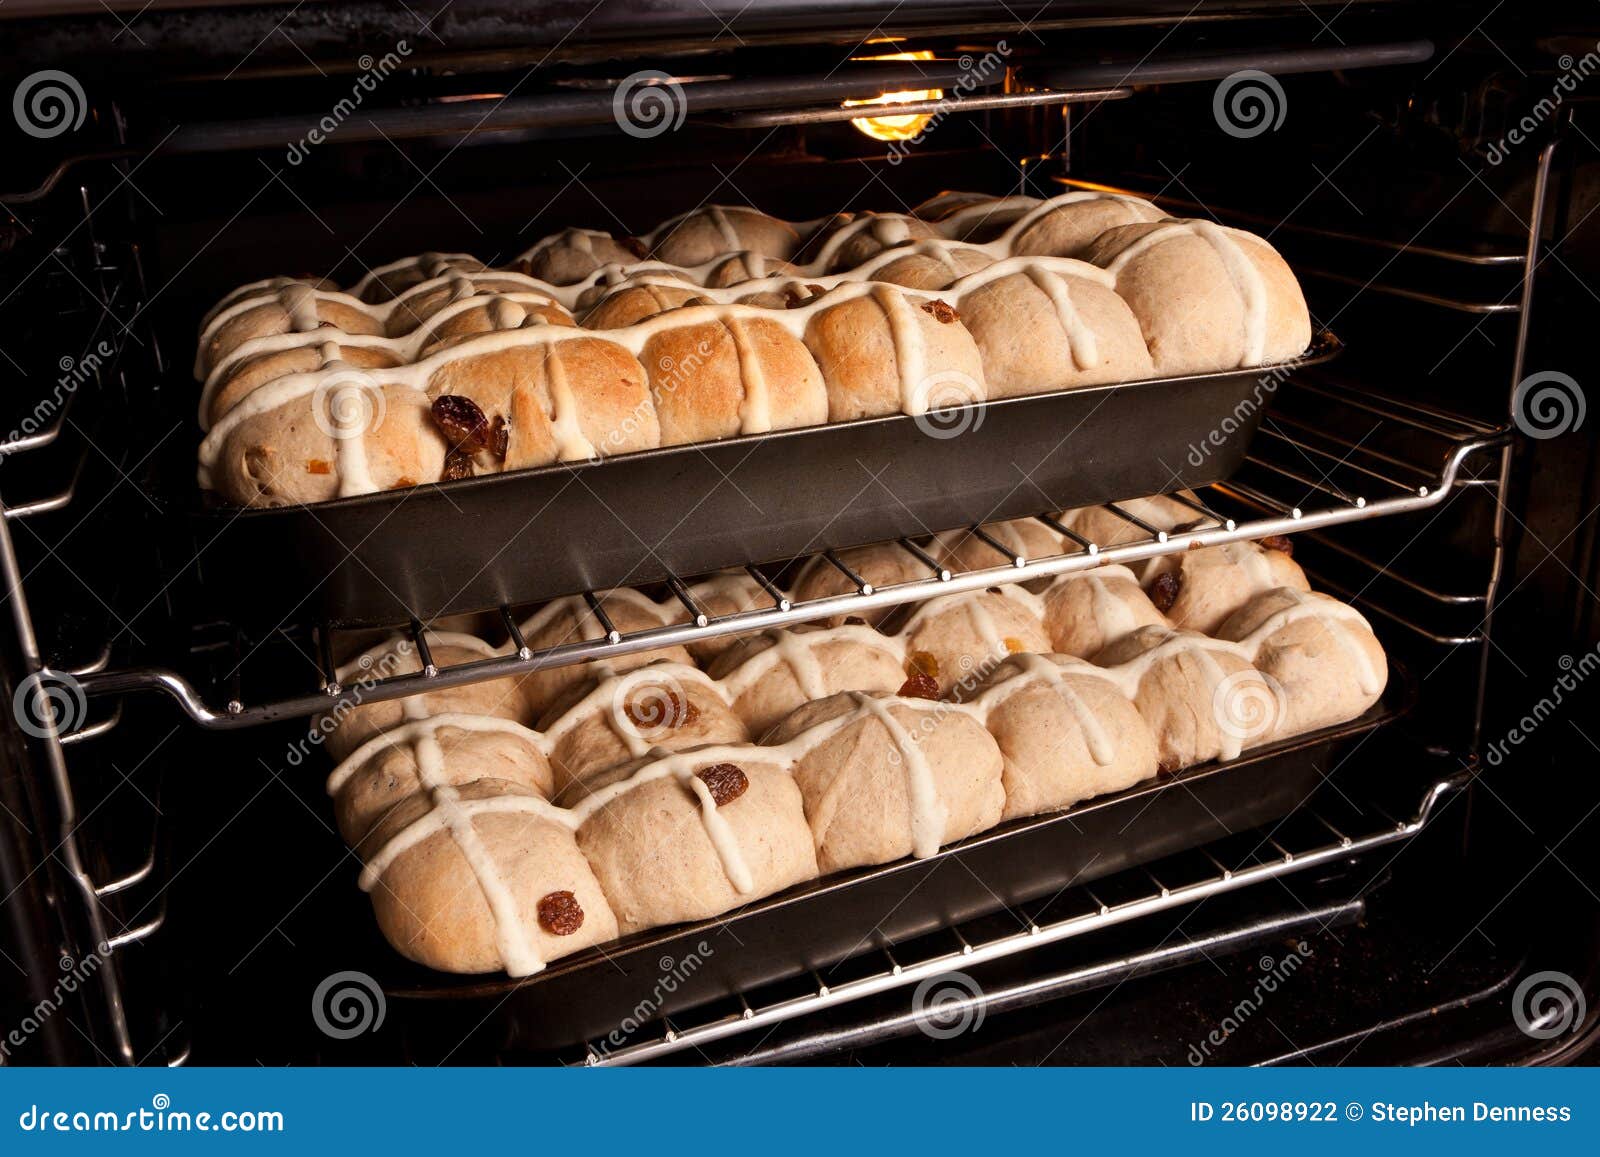 https://thumbs.dreamstime.com/z/homemade-hot-cross-buns-baking-oven-26098922.jpg